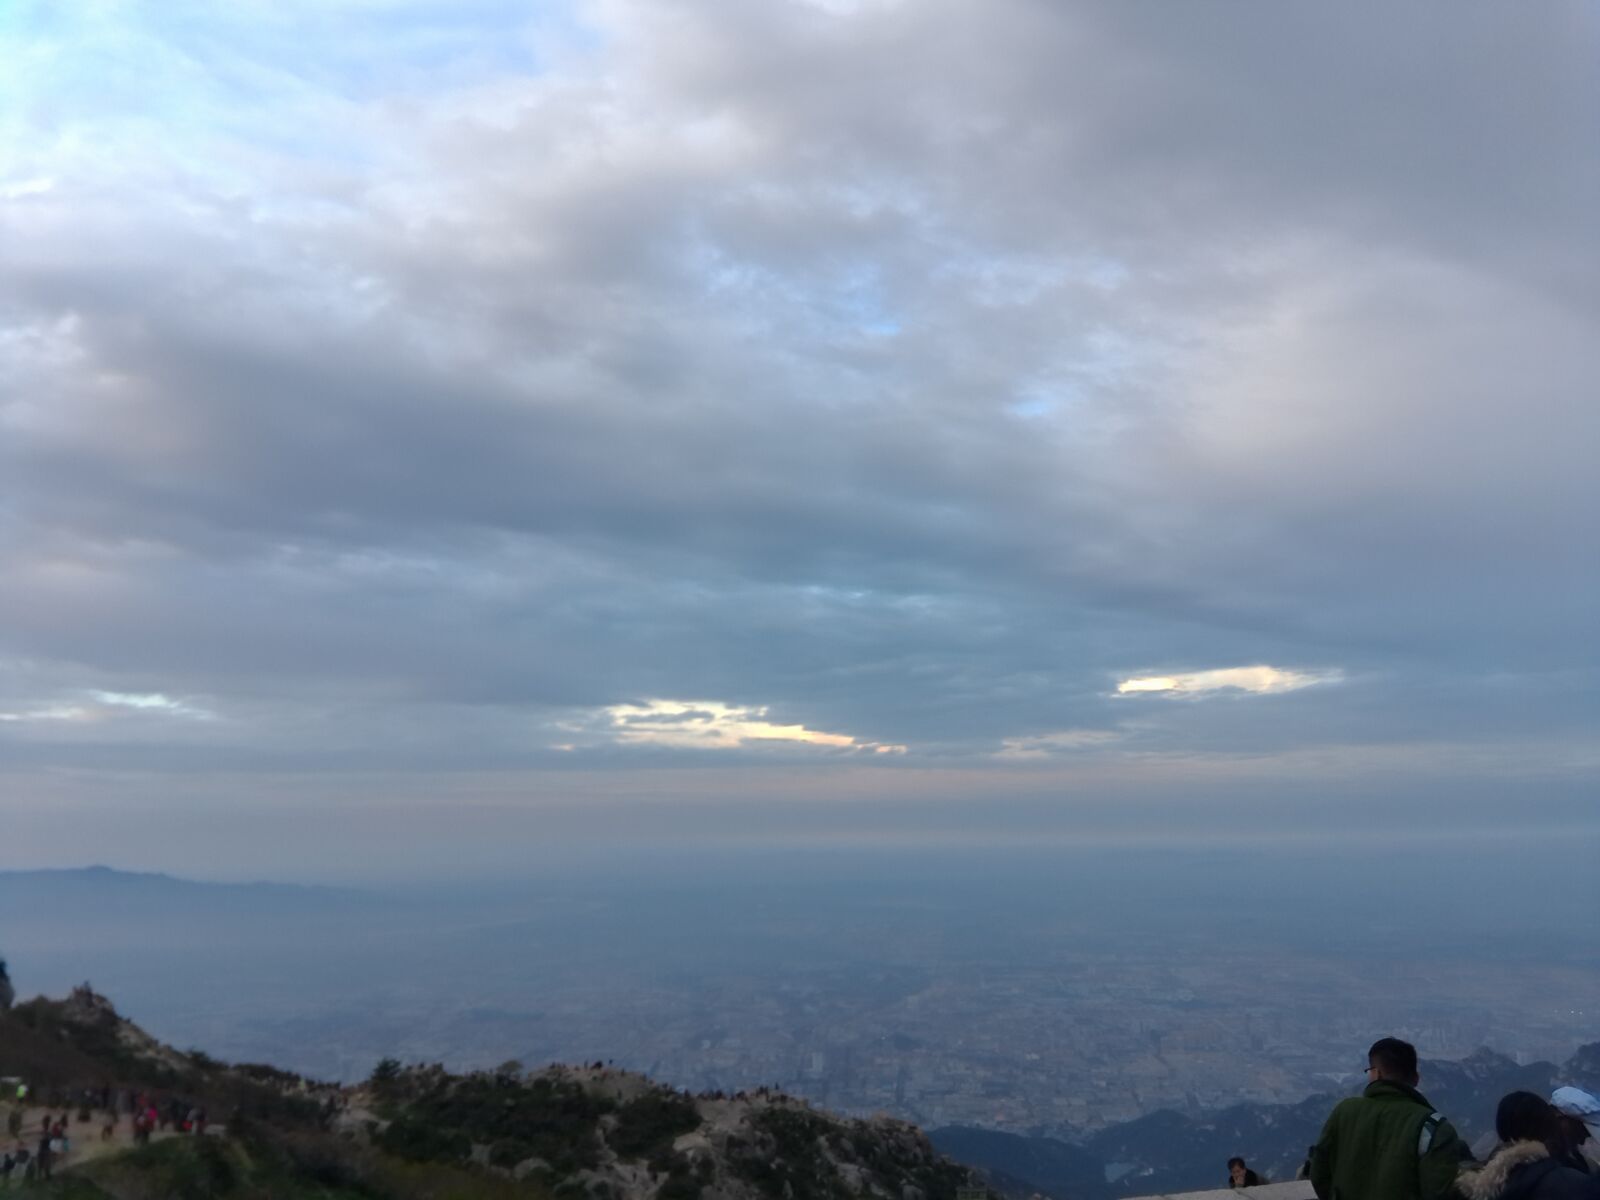 Meizu MX4 Pro sample photo. Taishan mountain, sunrise, poetry photography